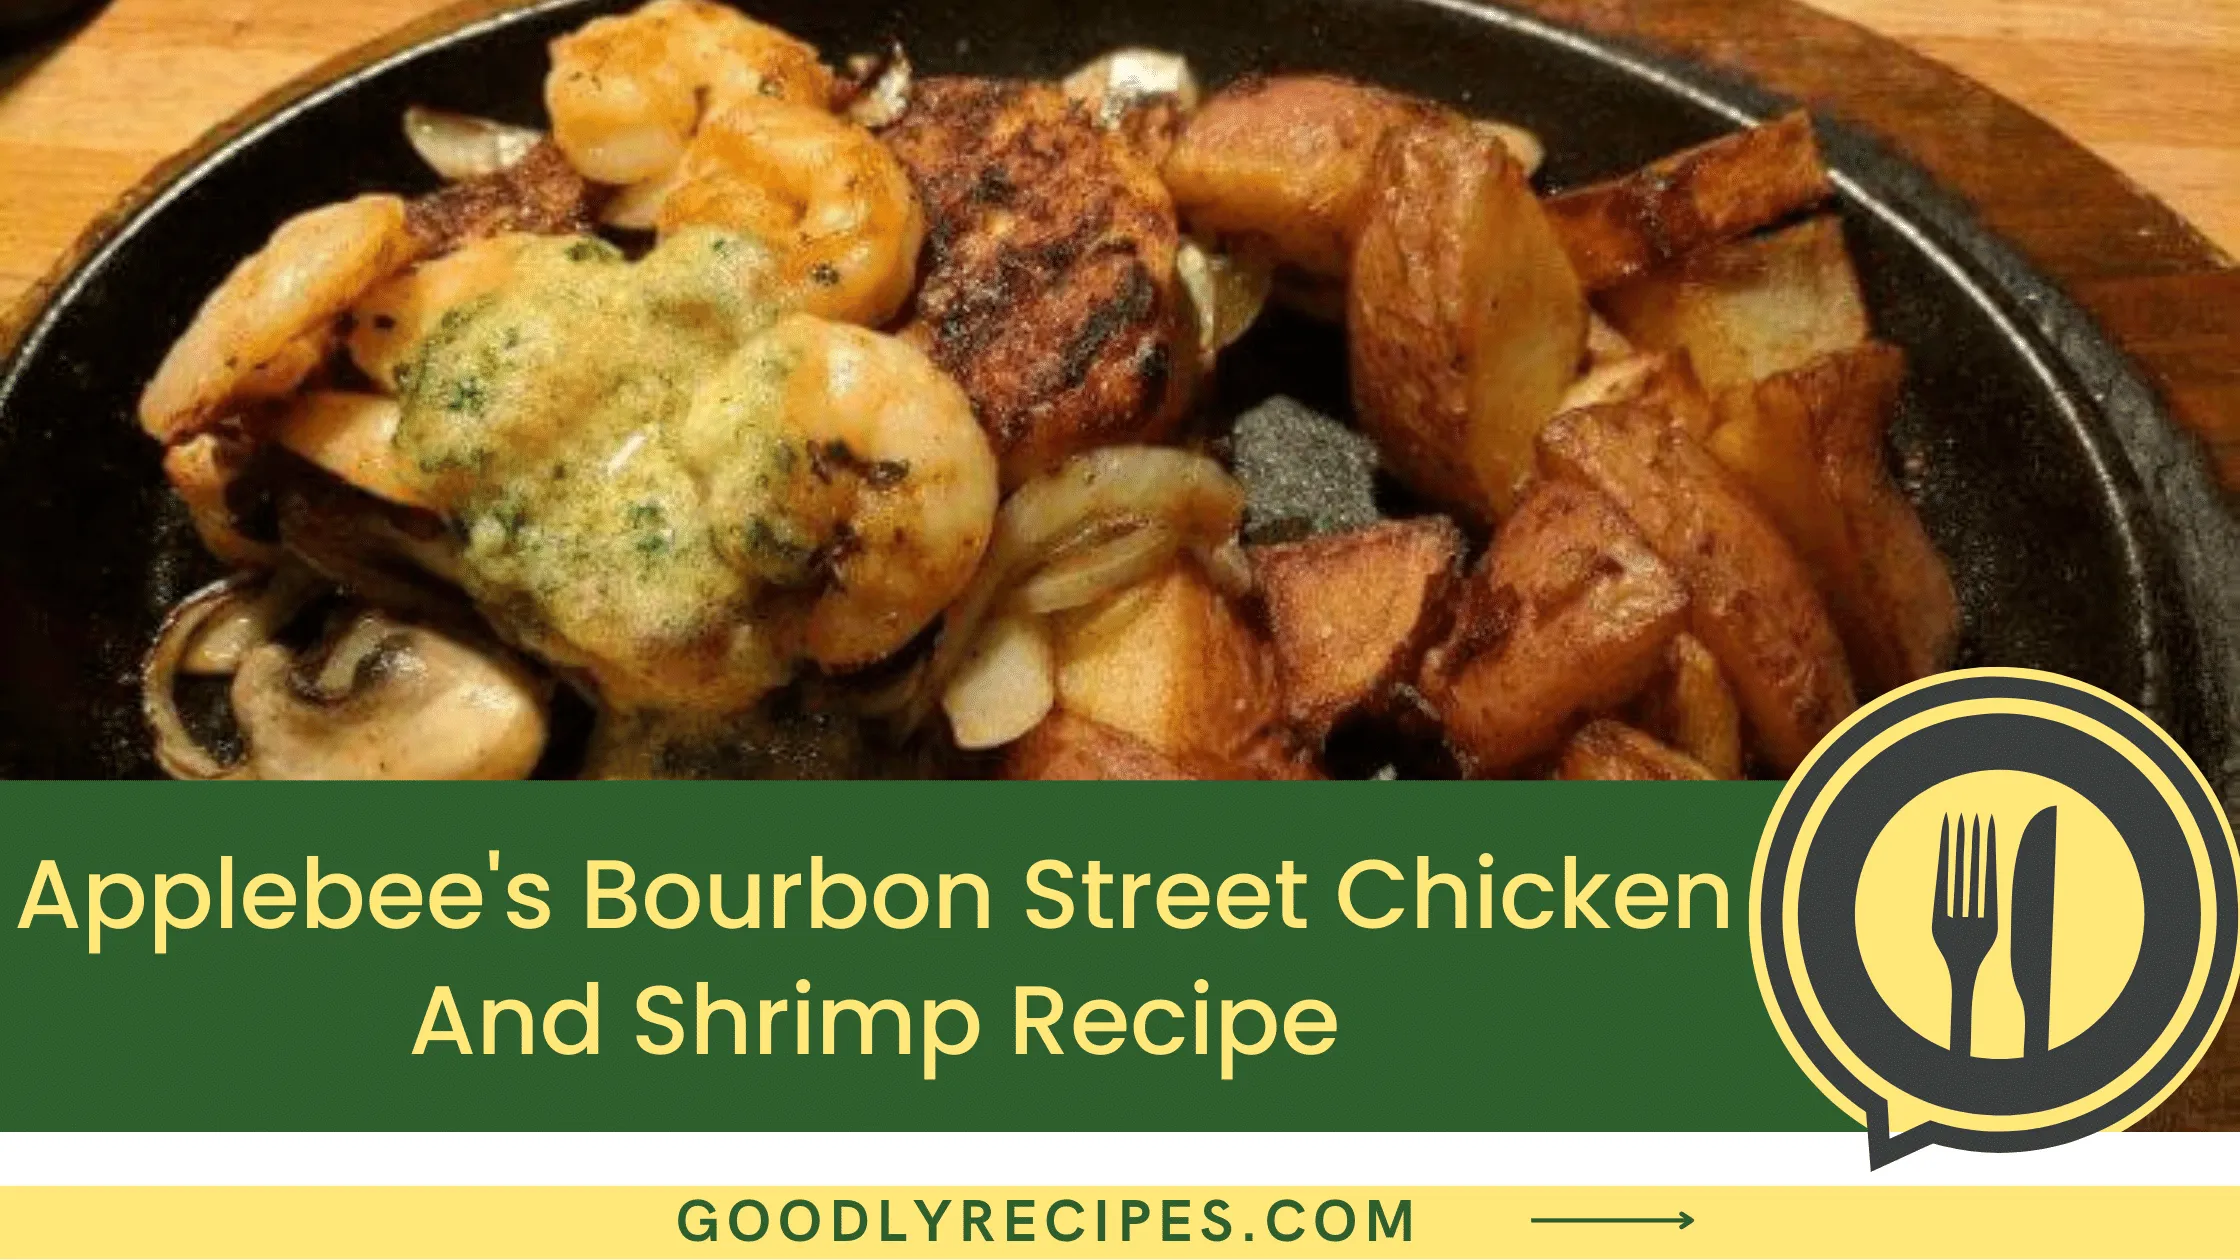 Applebee’s Bourbon Street Chicken And Shrimp Recipe